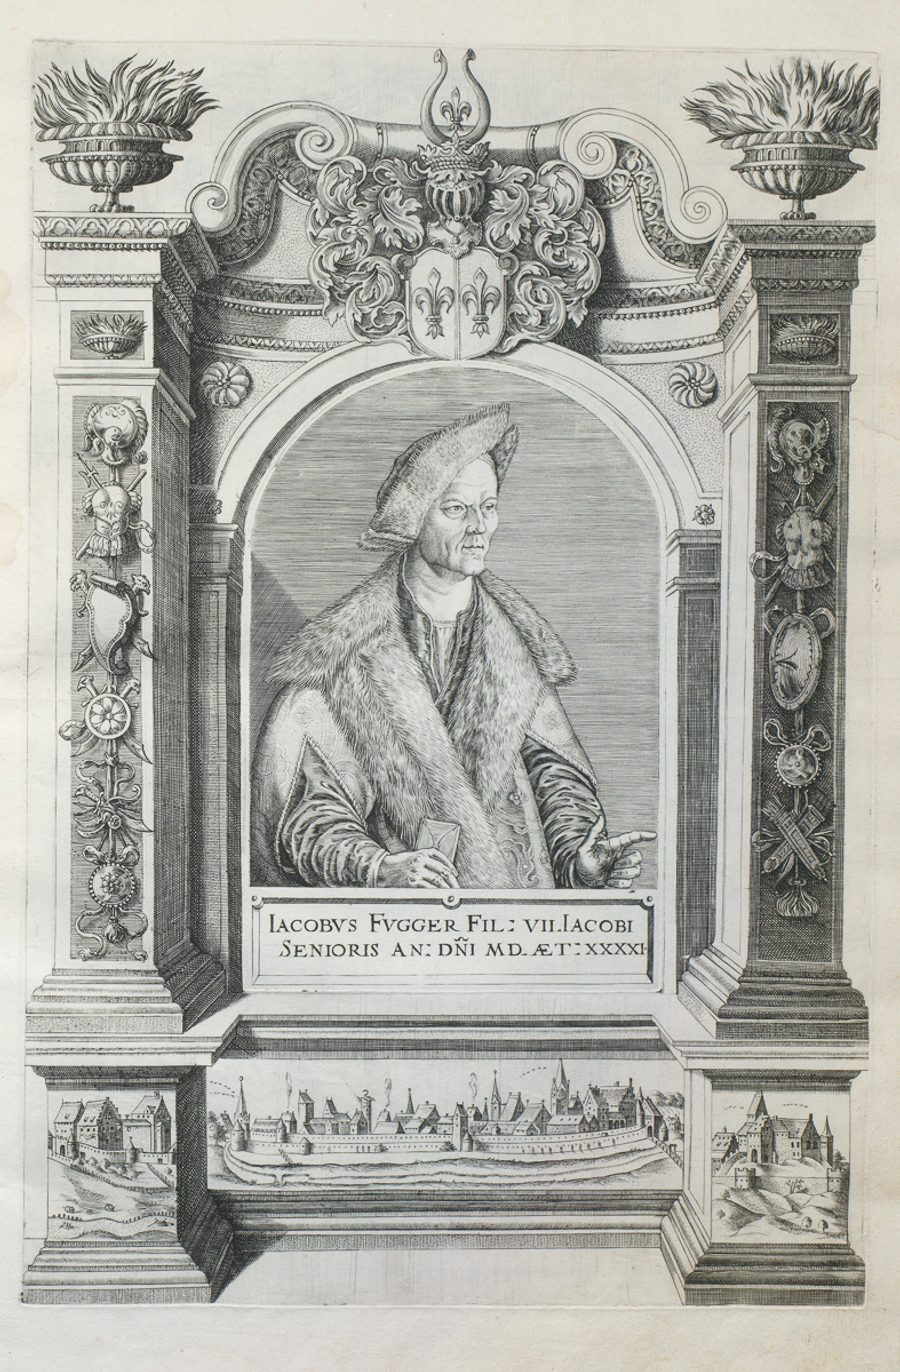 [Translate to English:] Jakob Fugger, Kupferstich von 1618